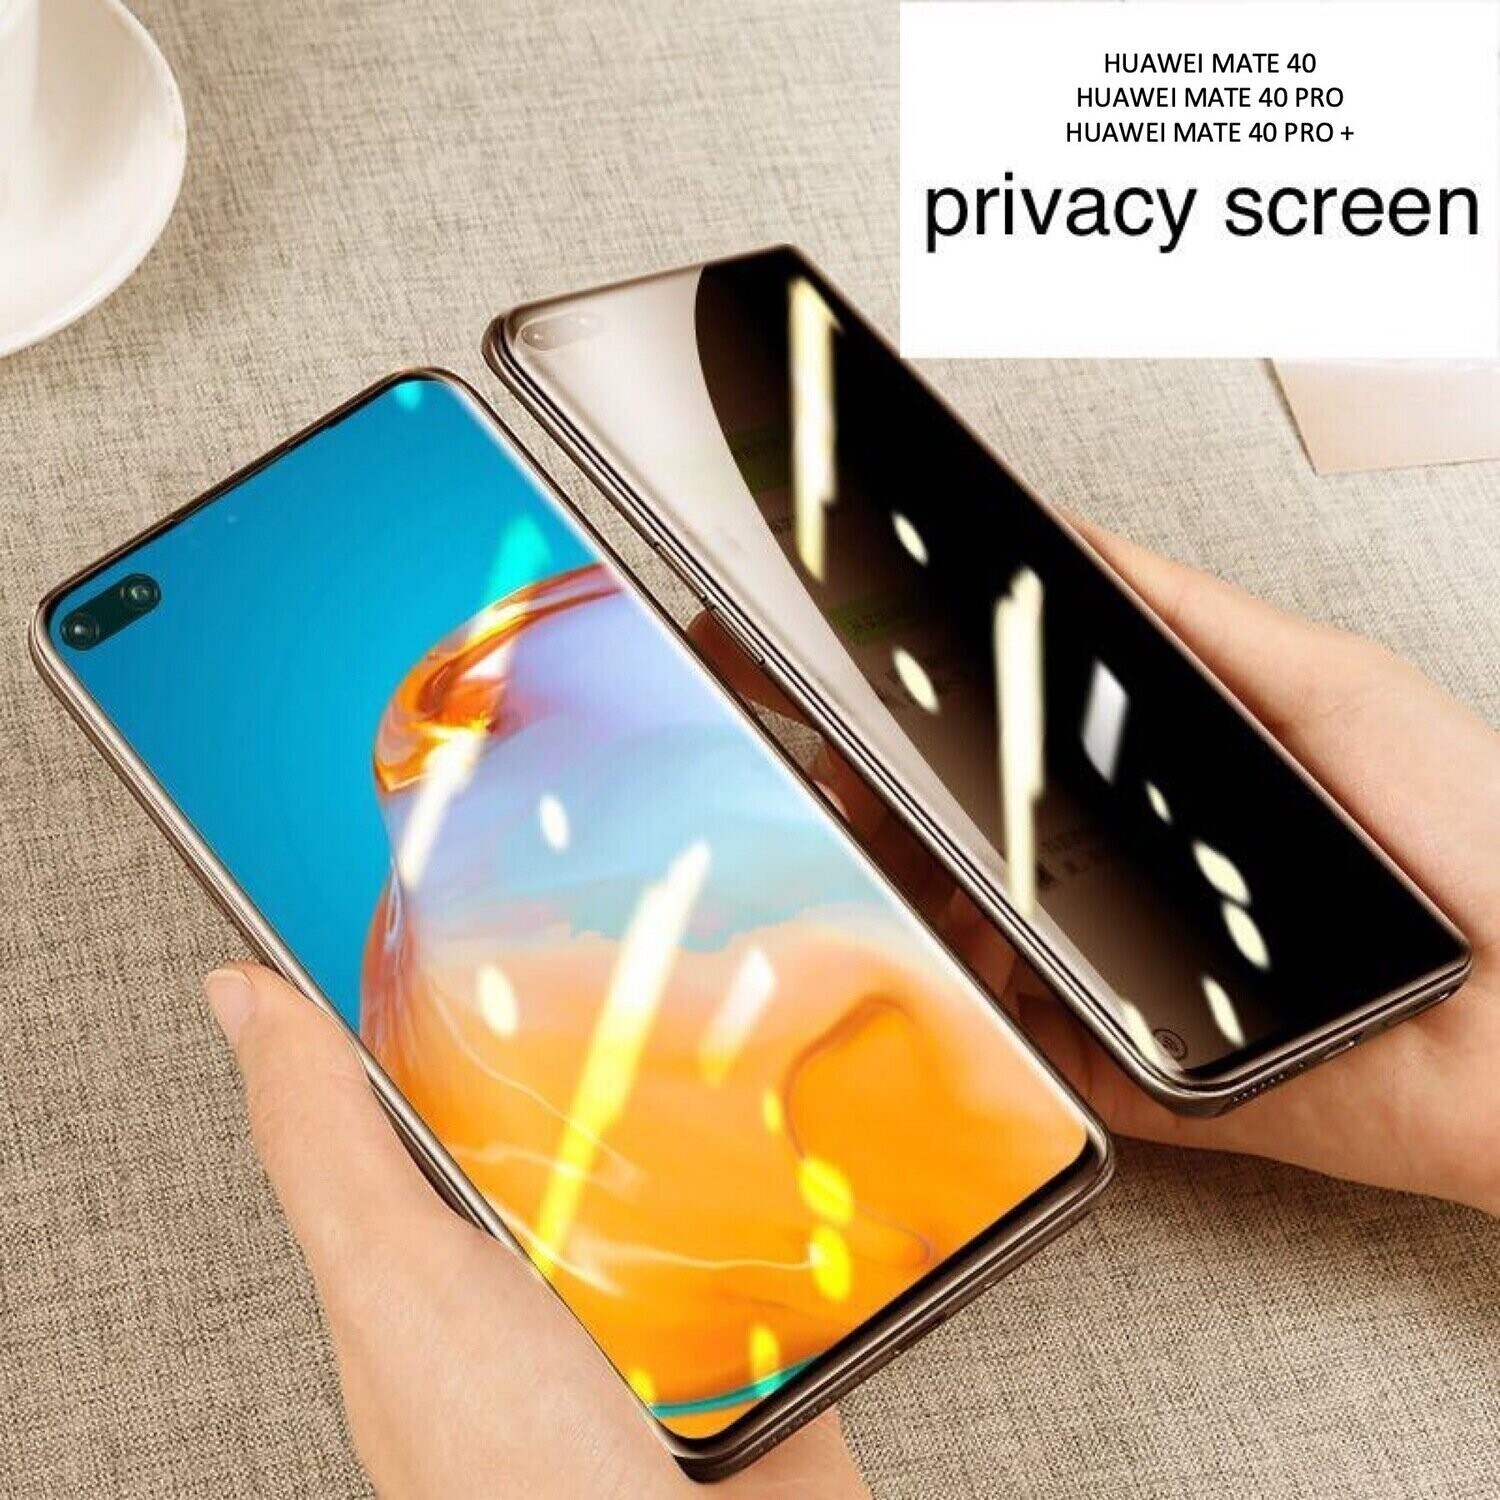 Komass Huawei Mate 40 Pro Tempered Glass, 3D UV Privacy